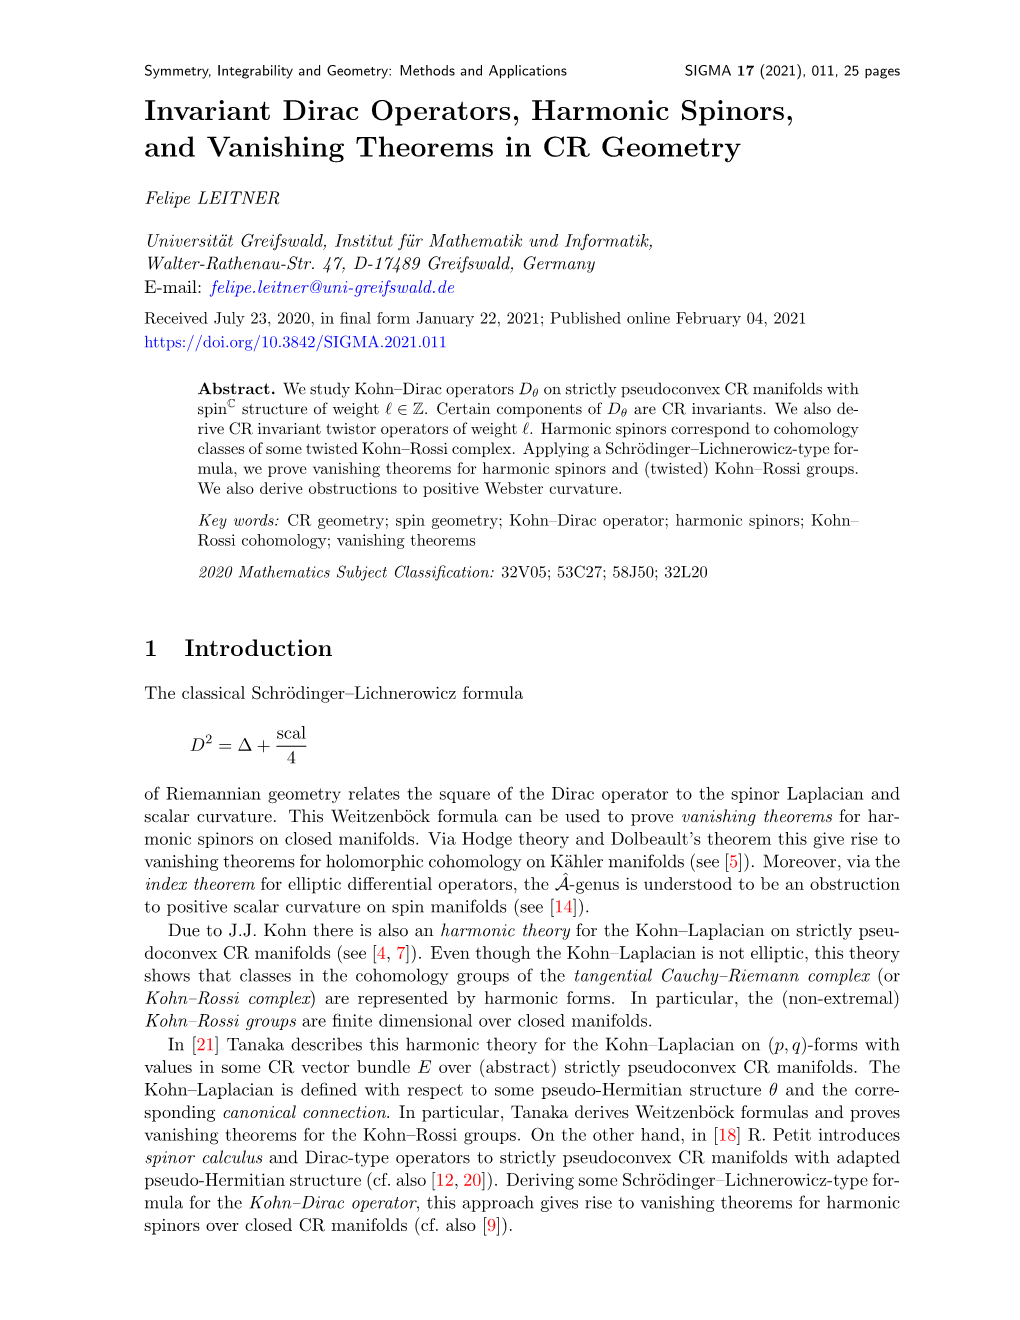 Invariant Dirac Operators, Harmonic Spinors, and Vanishing Theorems in CR Geometry